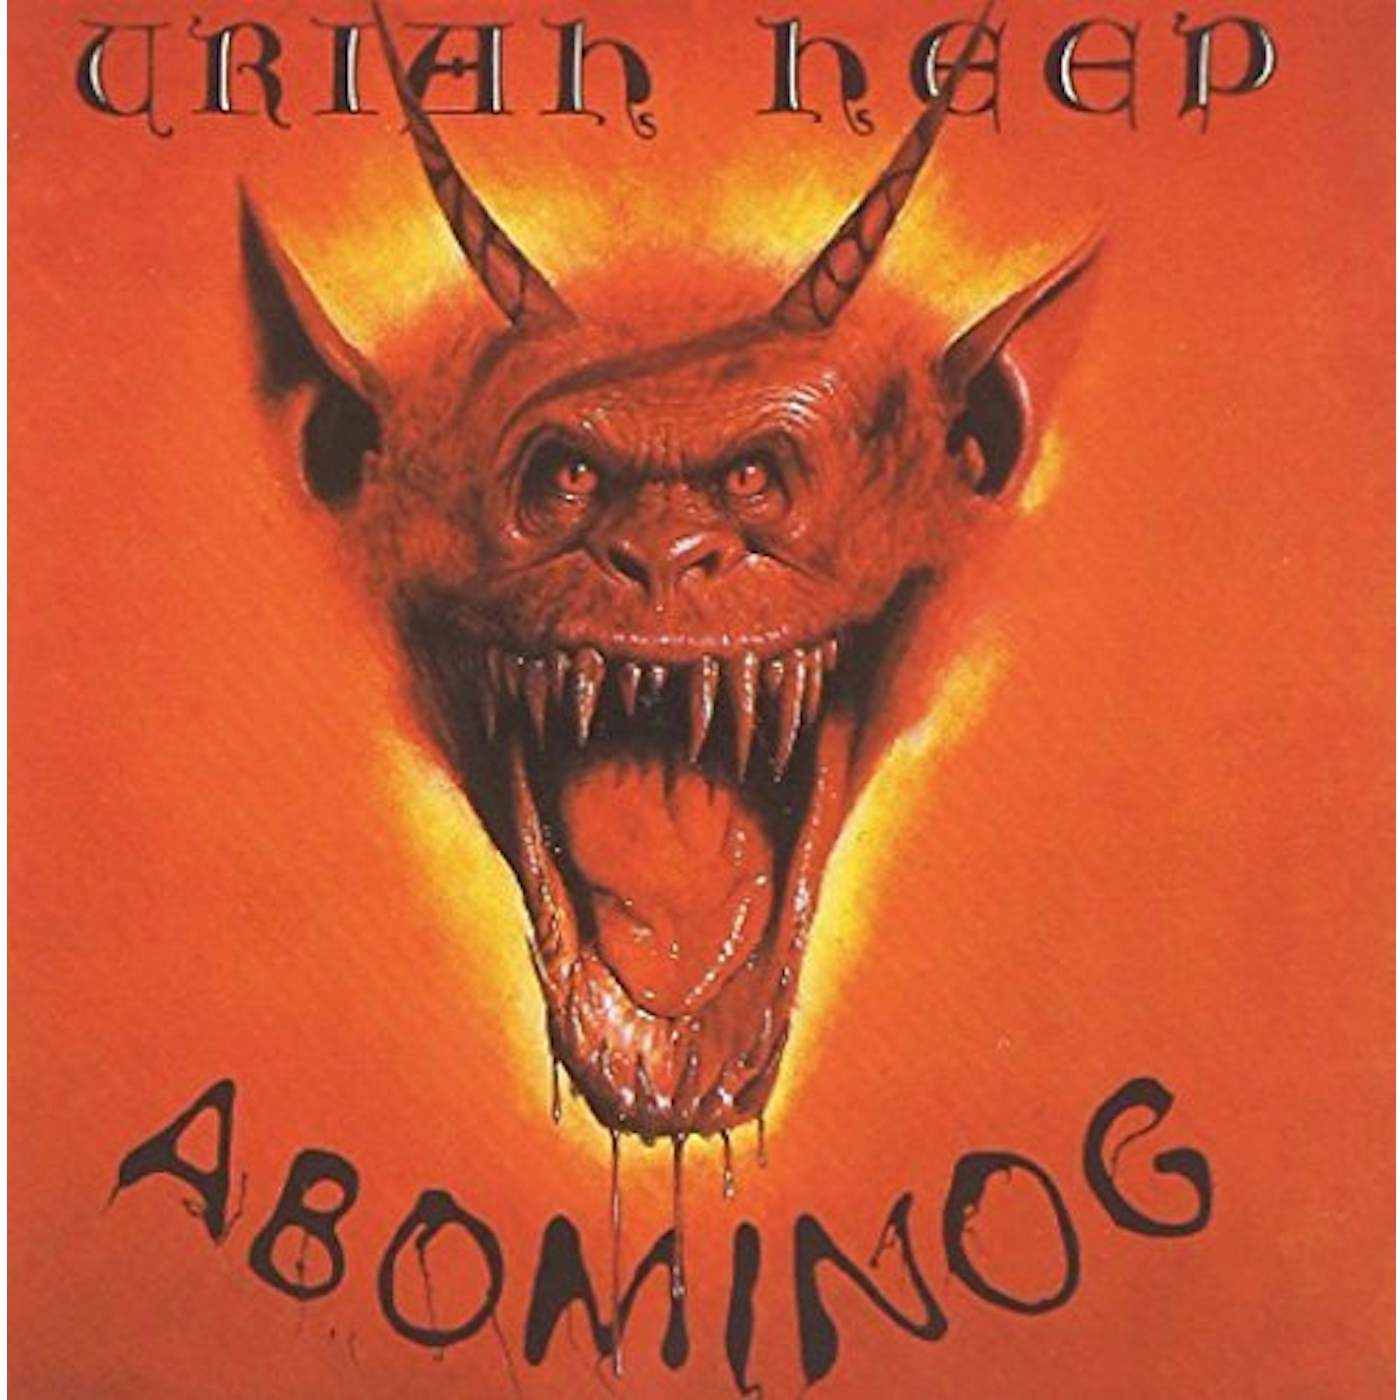 Uriah Heep ABOMINOG Vinyl Record